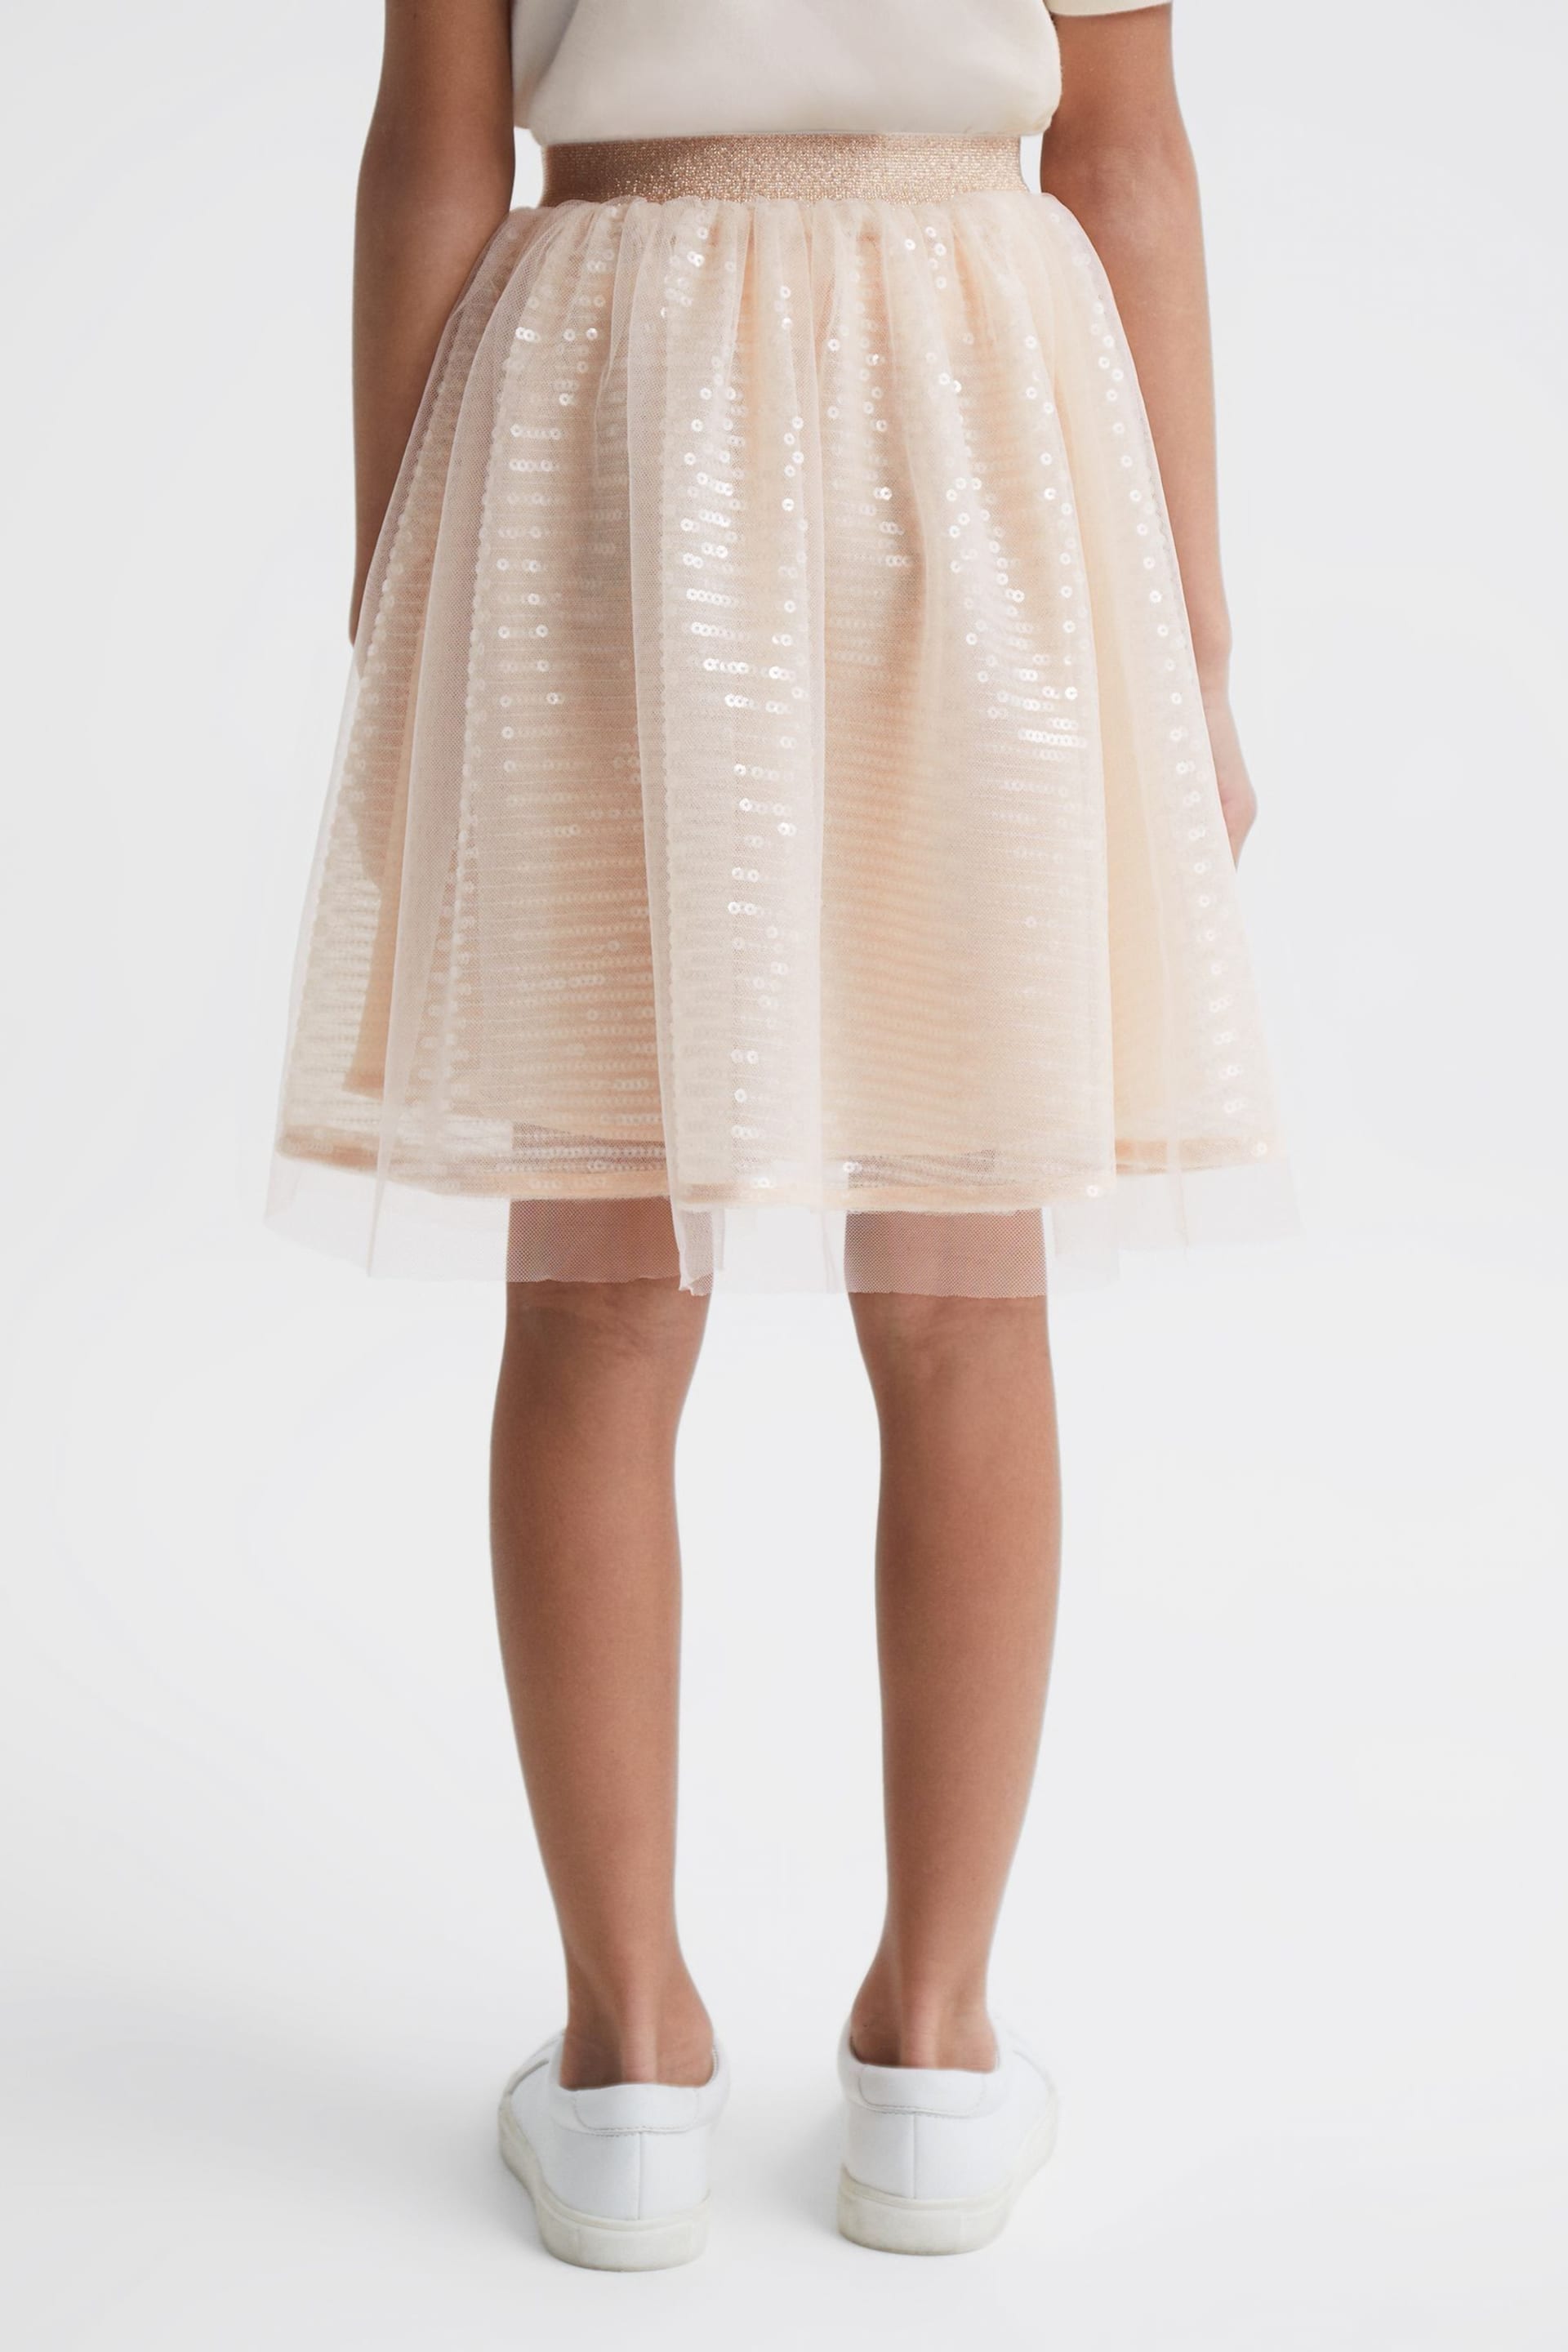 Reiss Pale Pink Charlotta Junior Sequin Midi Skirt - Image 5 of 6